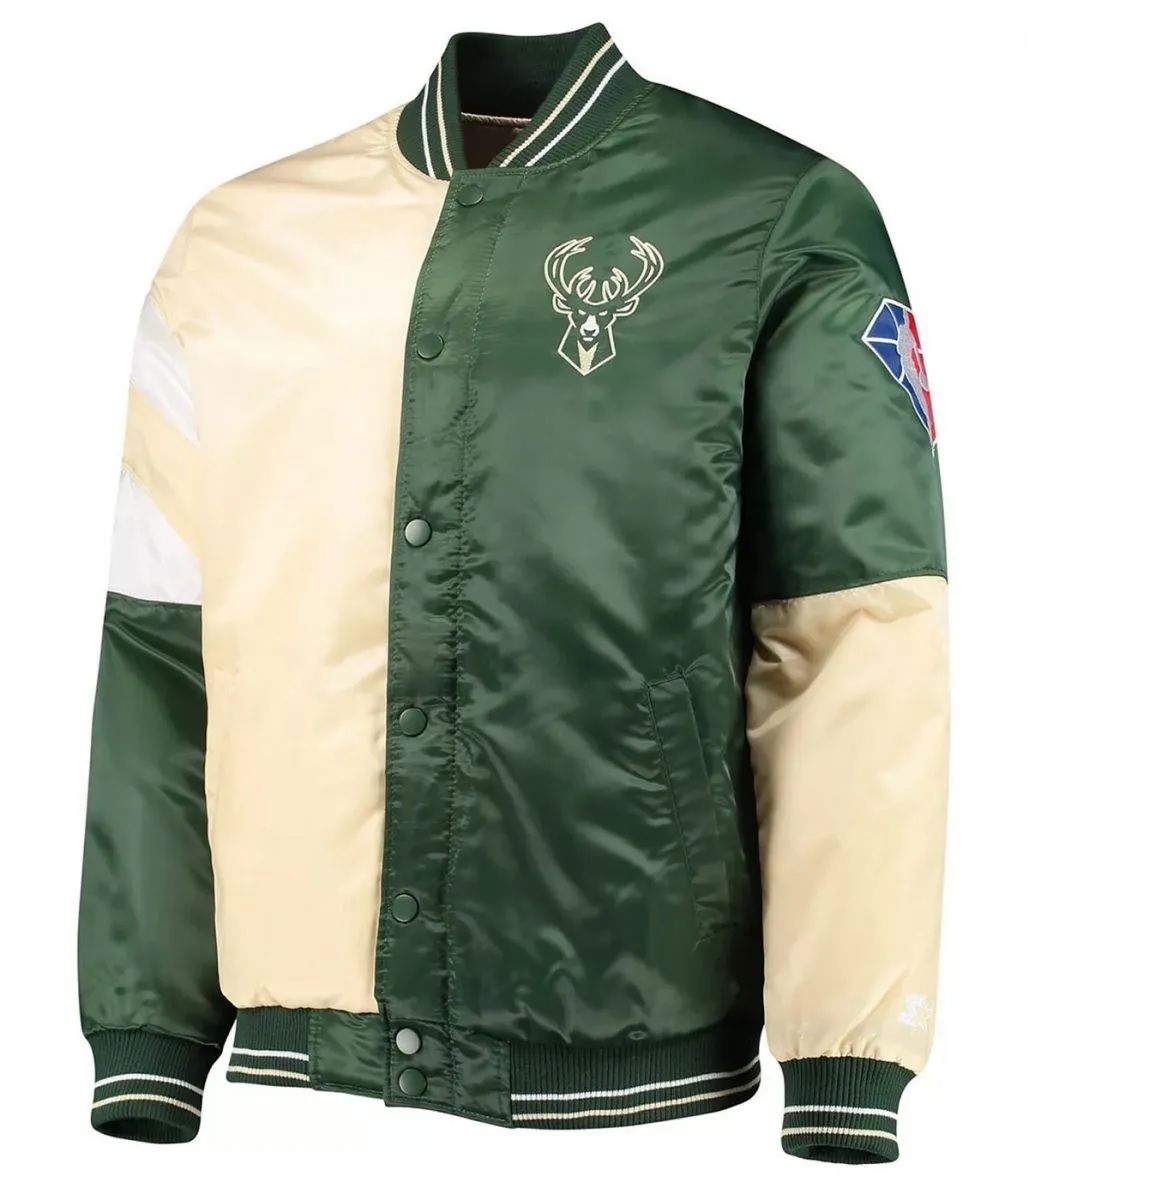 Milwaukee Bucks Leader 75th Anniversary Cream/Green Color Block Jacket